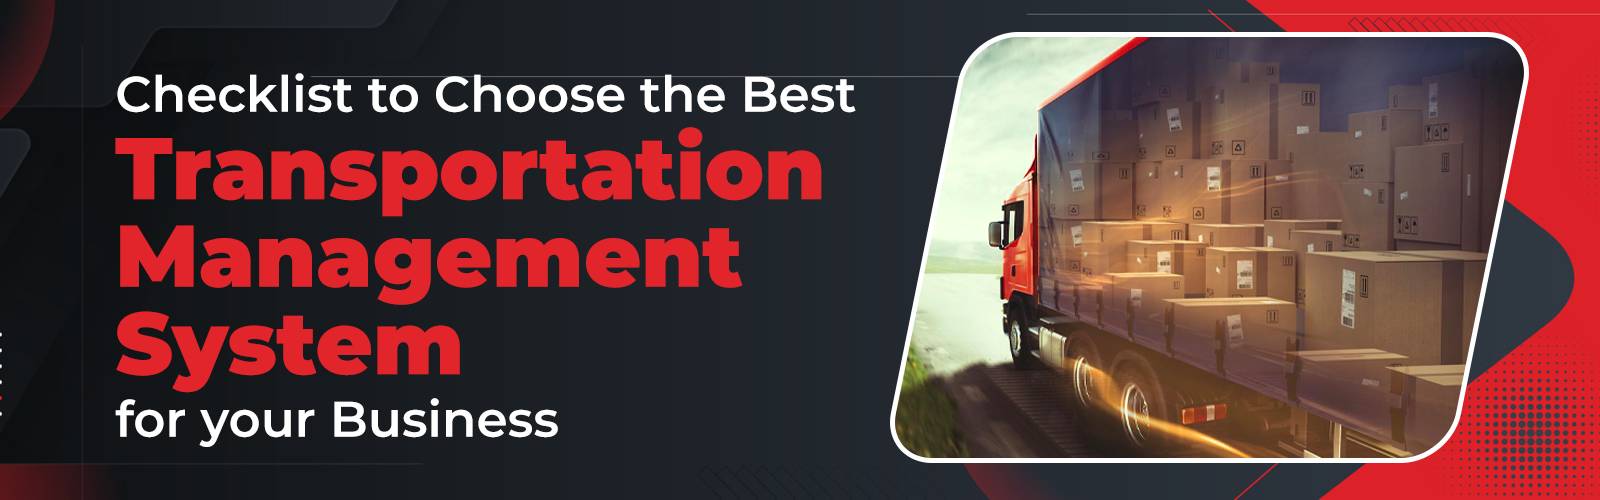 Checklist to choose the best transportation management software